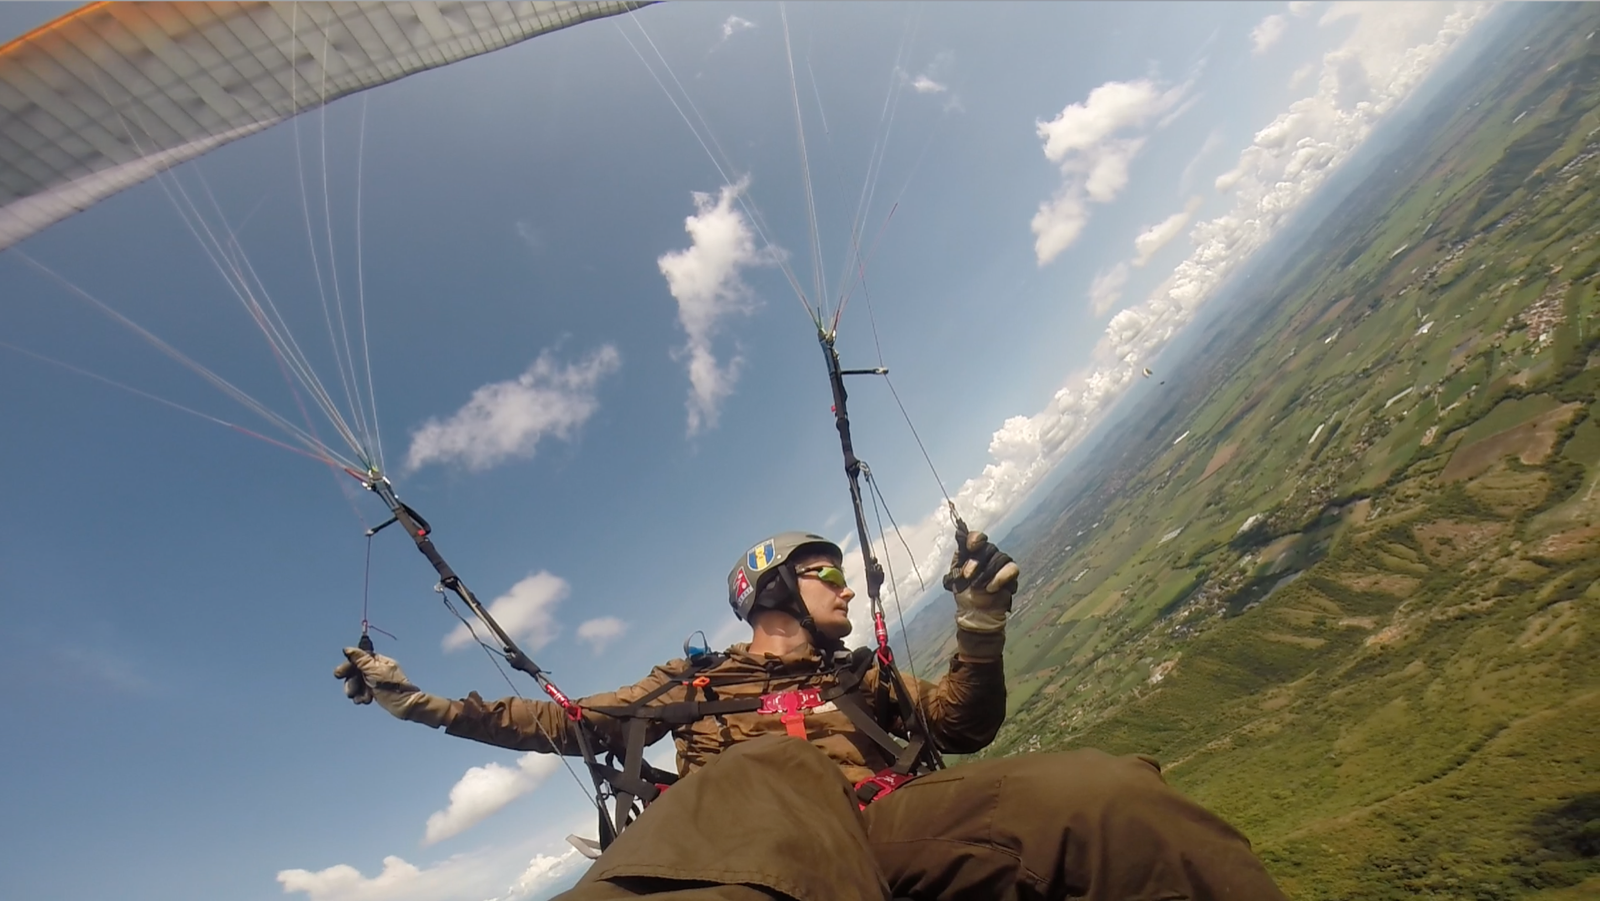 Turning paraglider